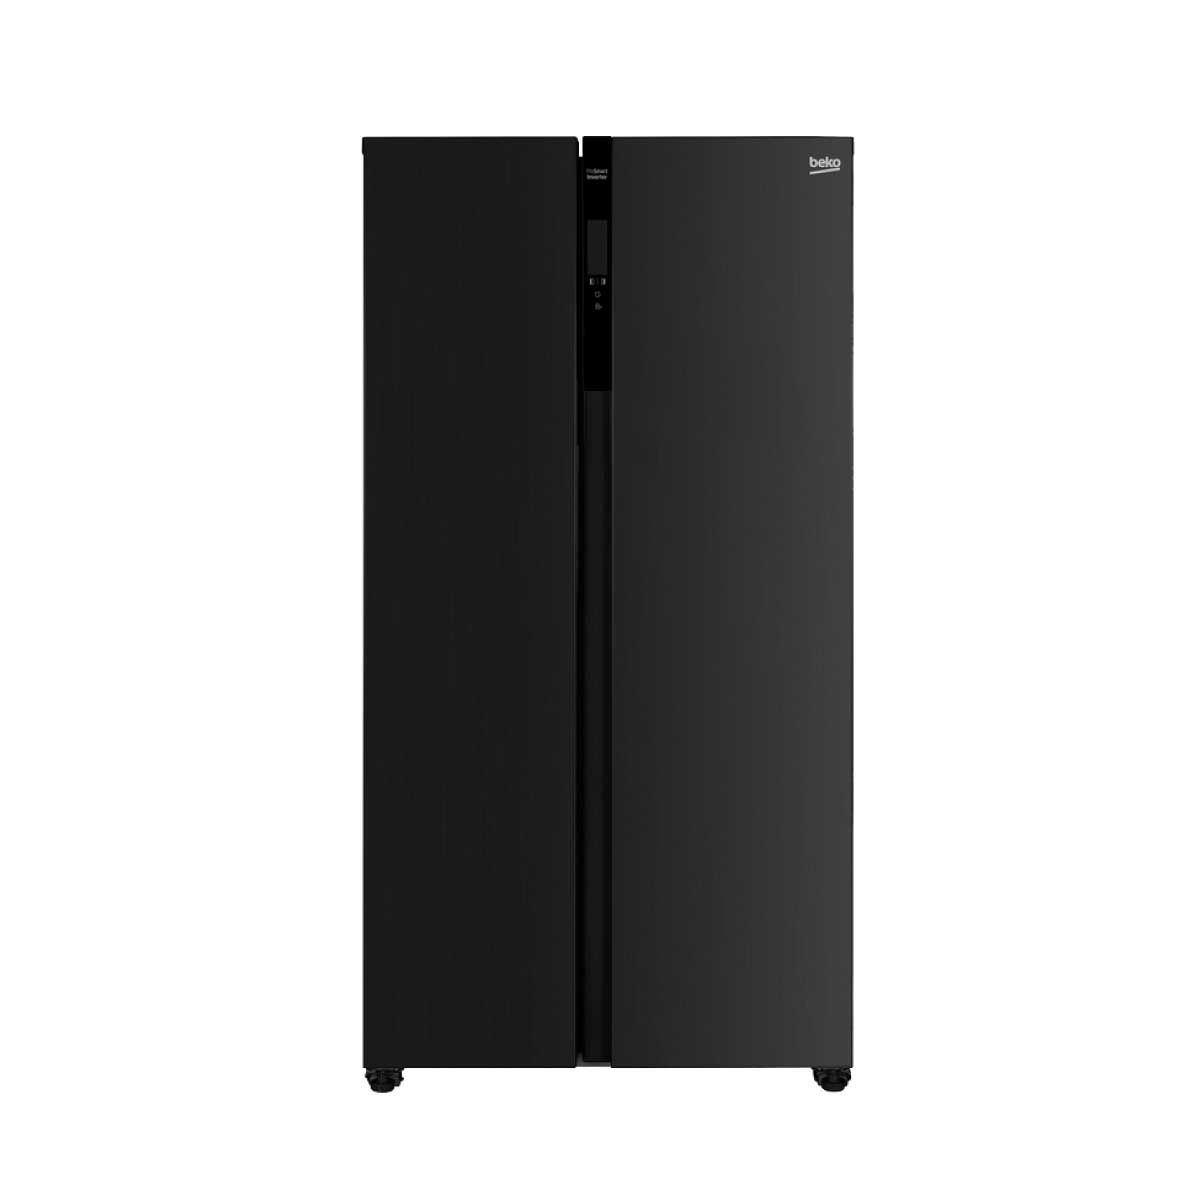 BEKO ตู้เย็น SIDE BY SIDE  18.4 คิว สีดำ   รุ่น GNO563E40HFKTH